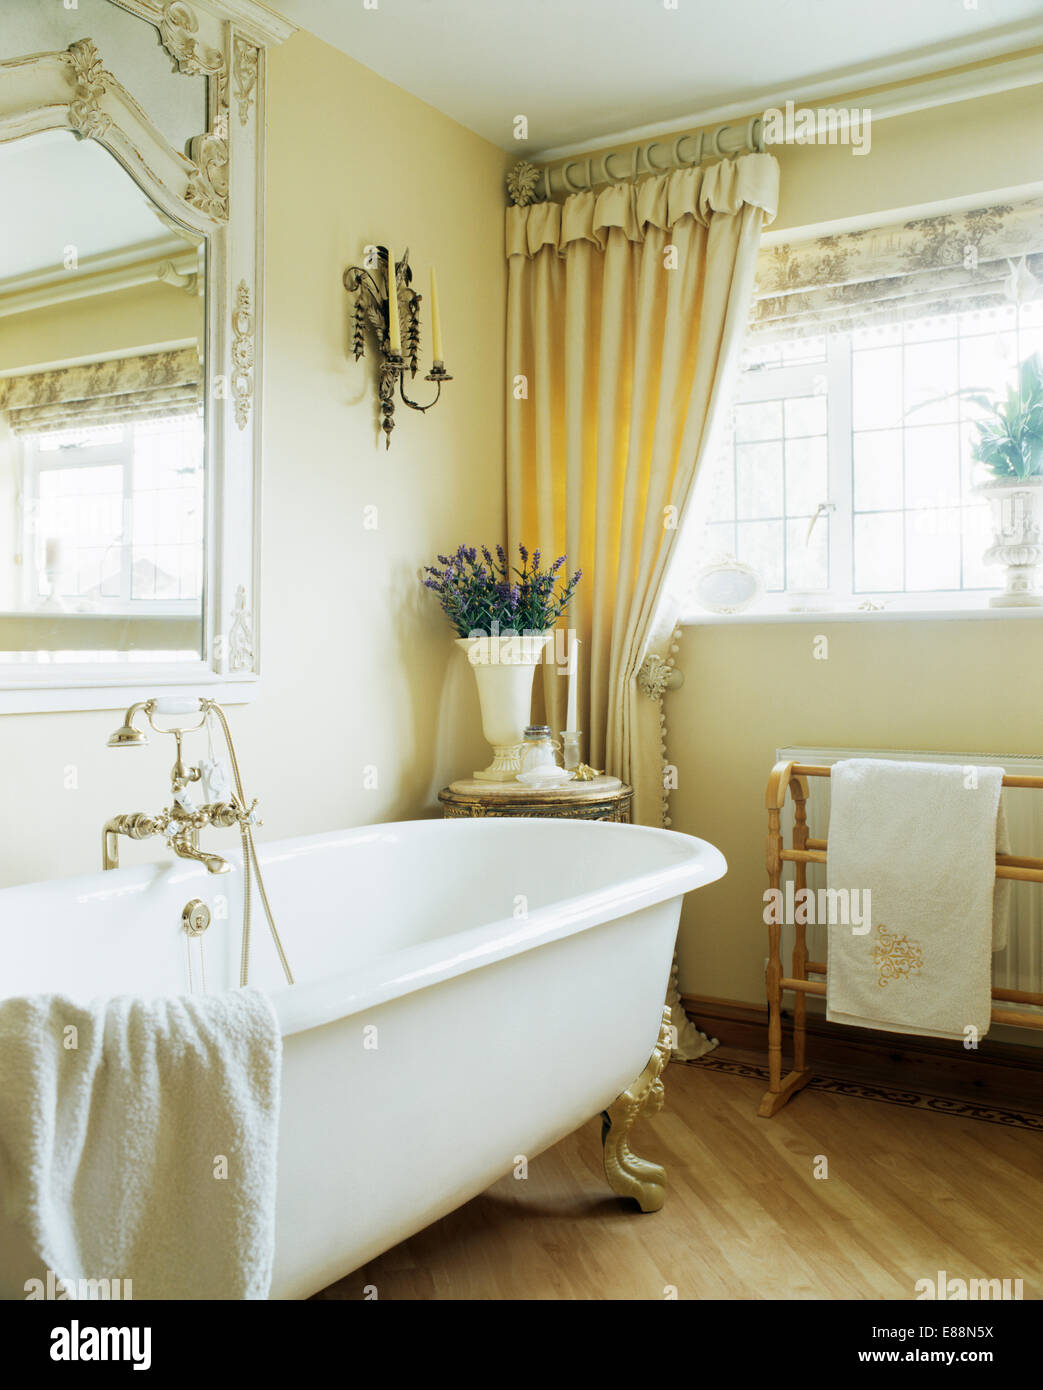 Roll-top bath in cream bathroom with cream curtains on window above heated  towel-rail Stock Photo - Alamy